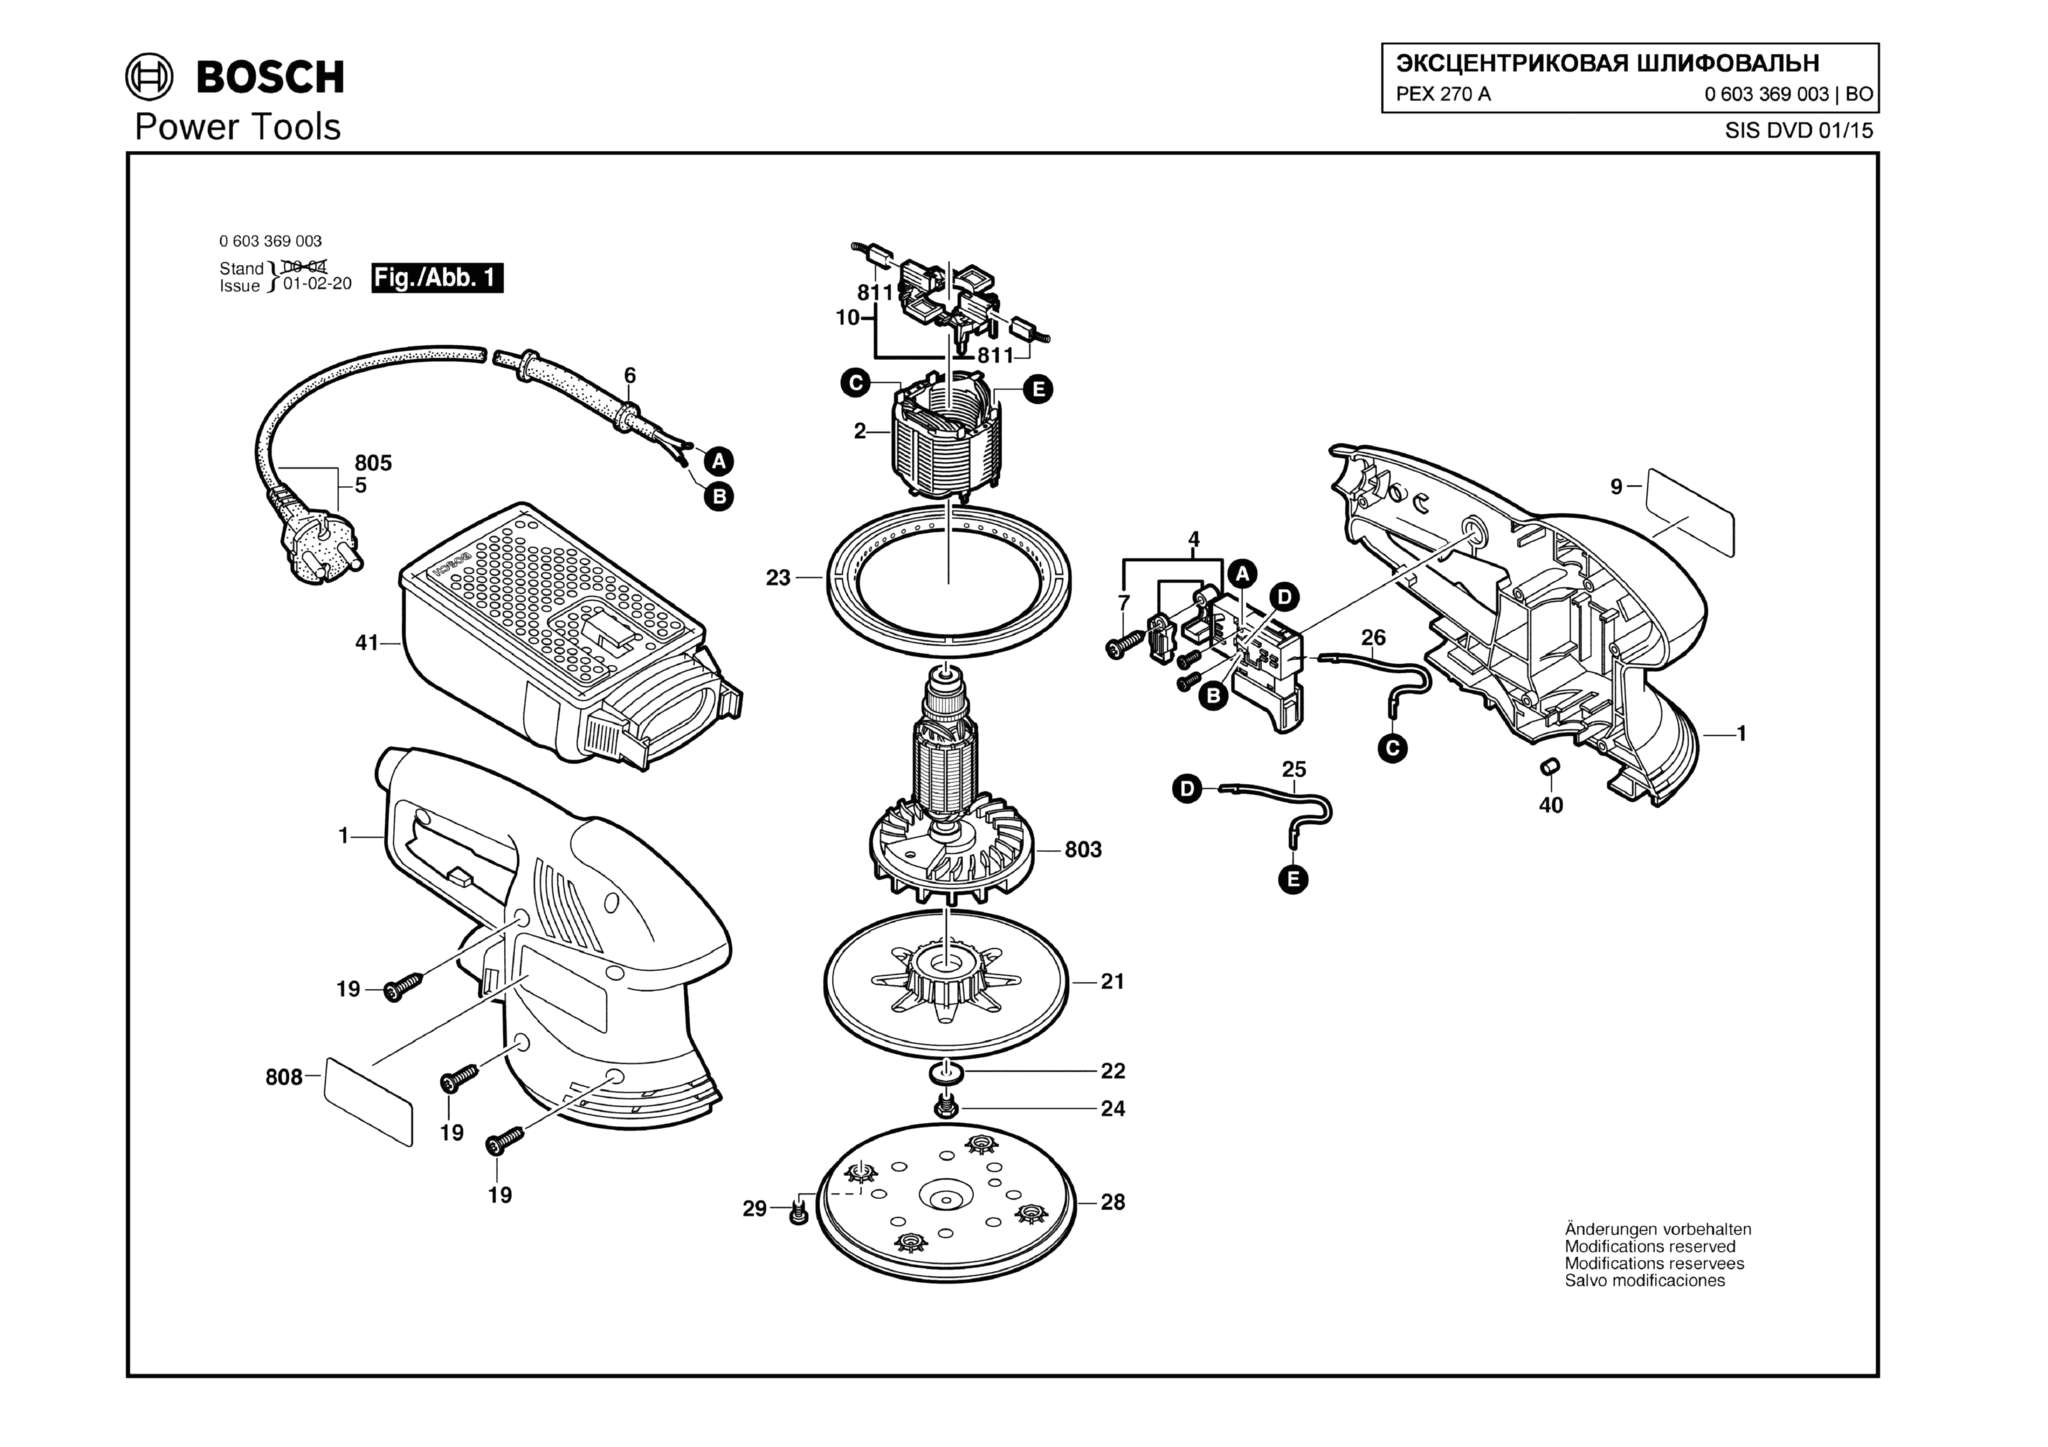 Запчасти, схема и деталировка Bosch PEX 270 A (ТИП 0603369003)